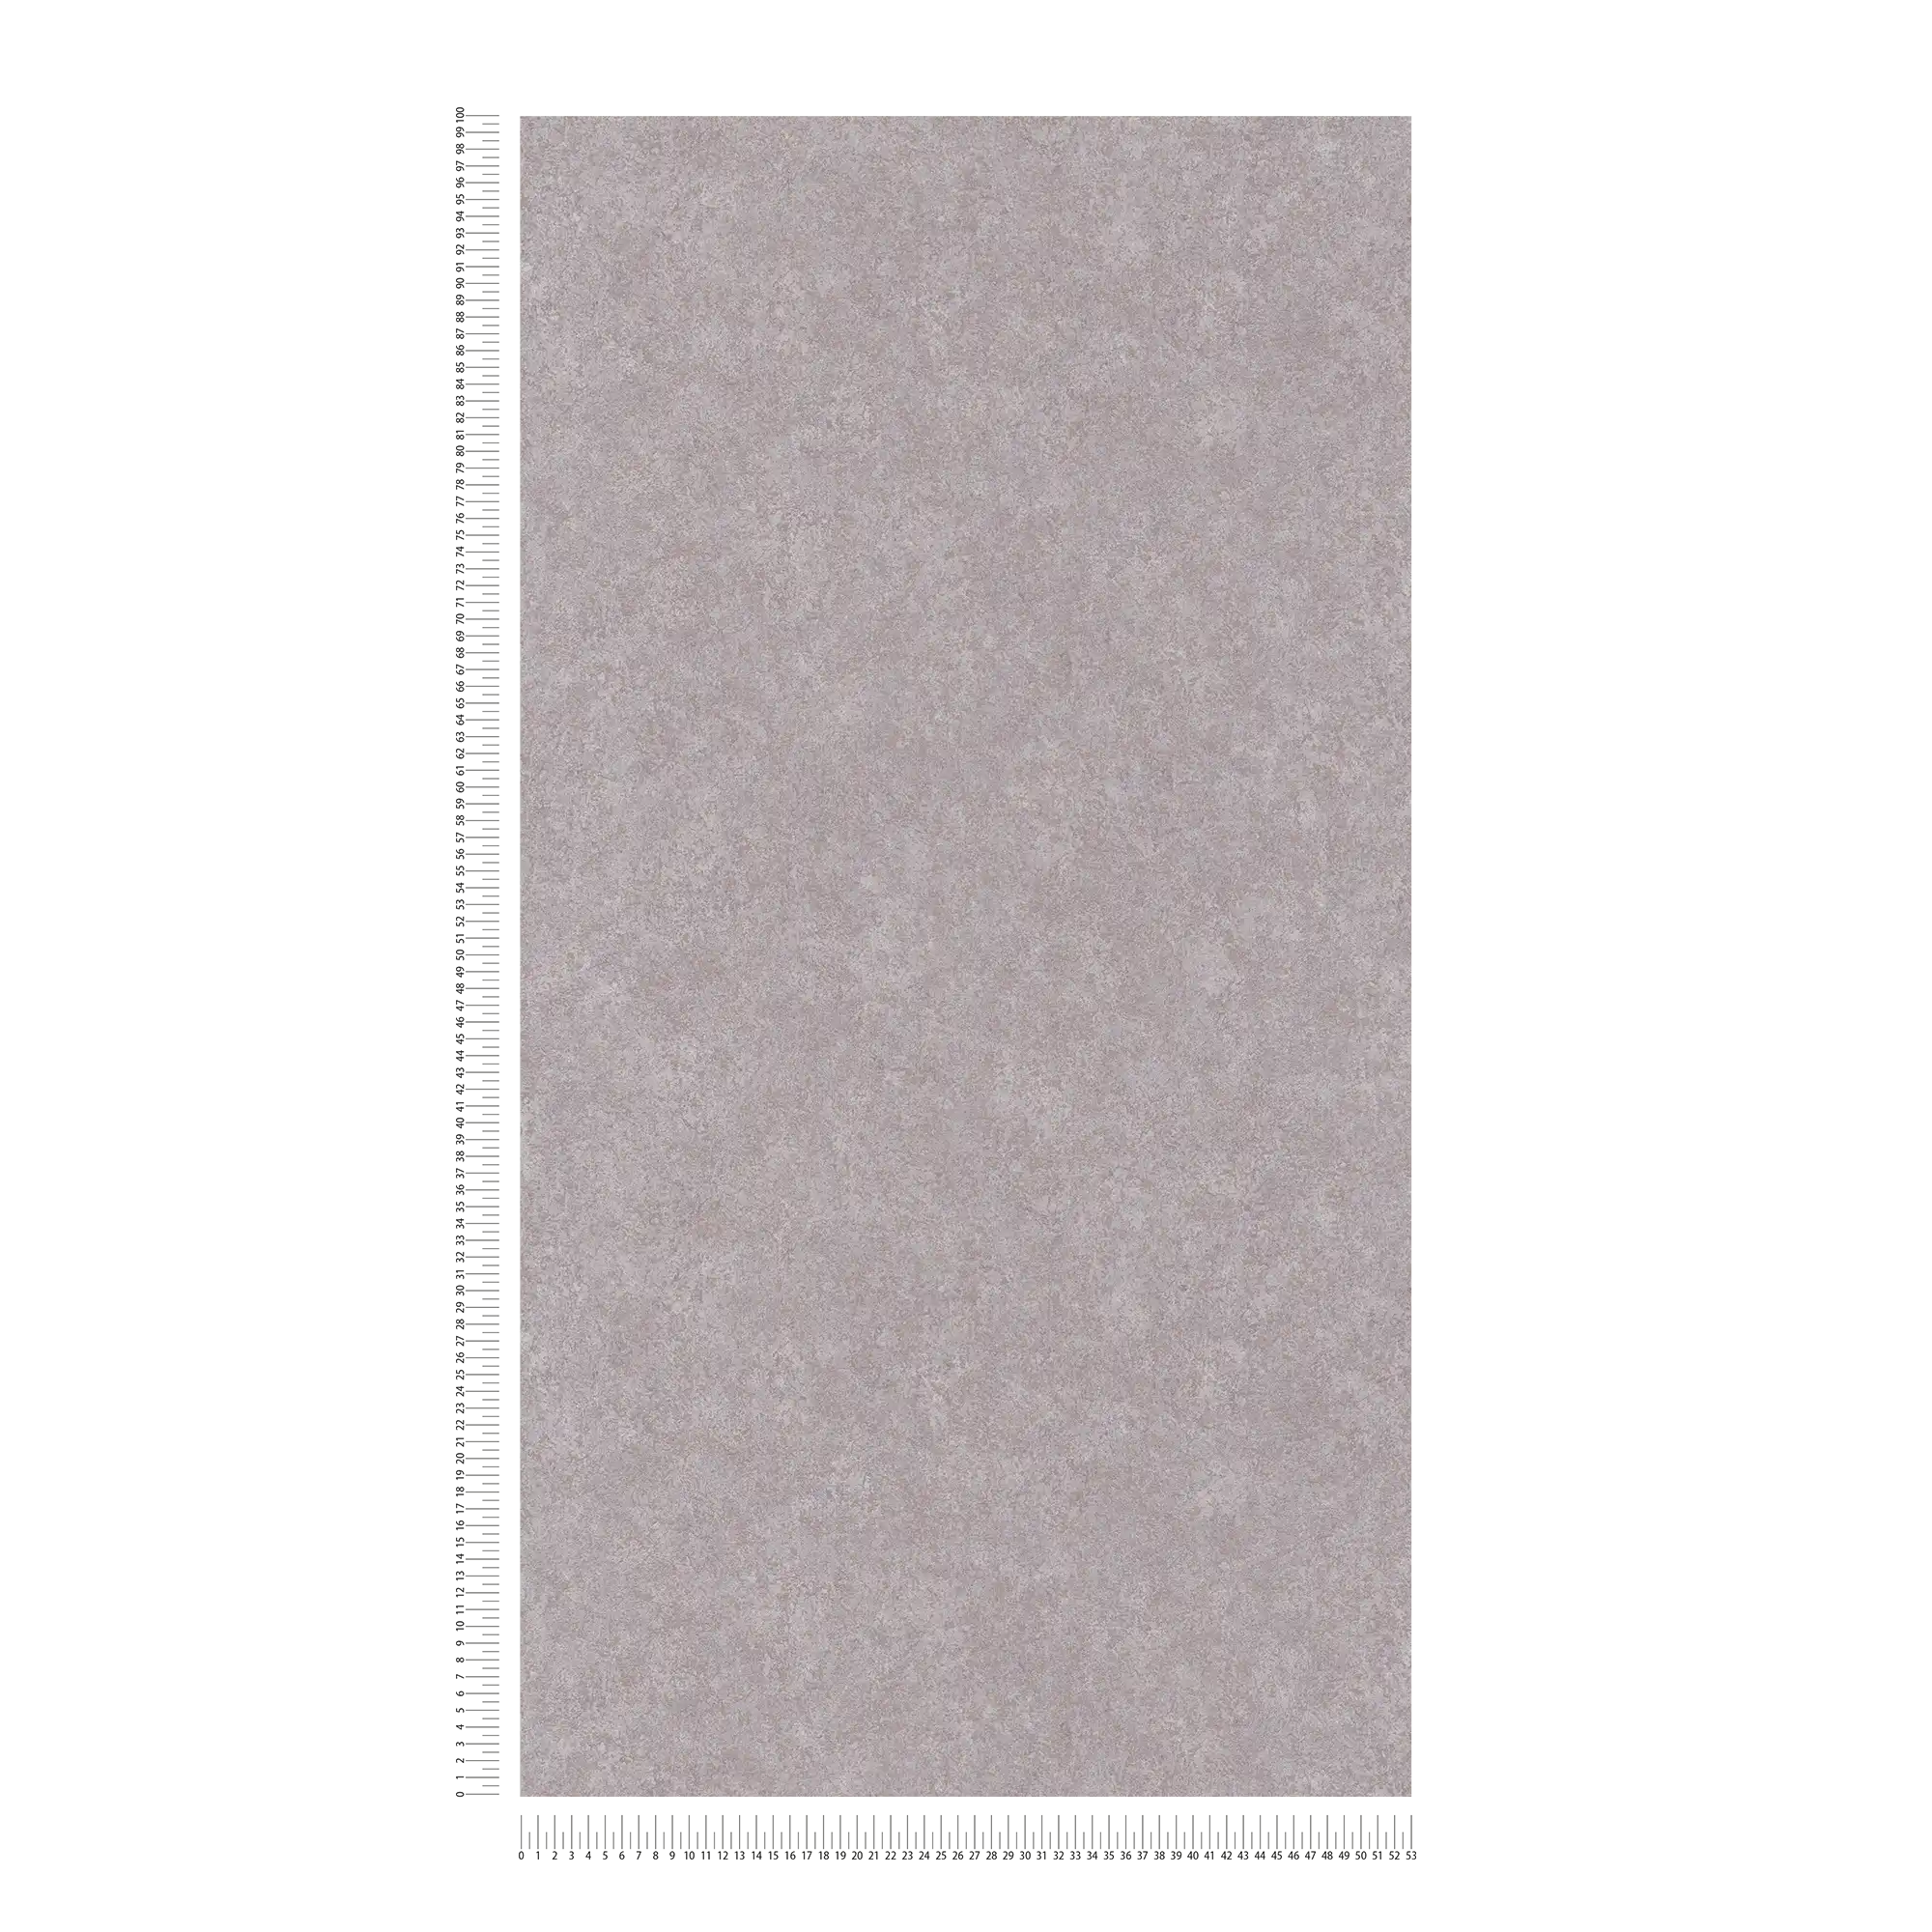             Carta da parati neutra effetto gesso con superficie opaca - grigio
        